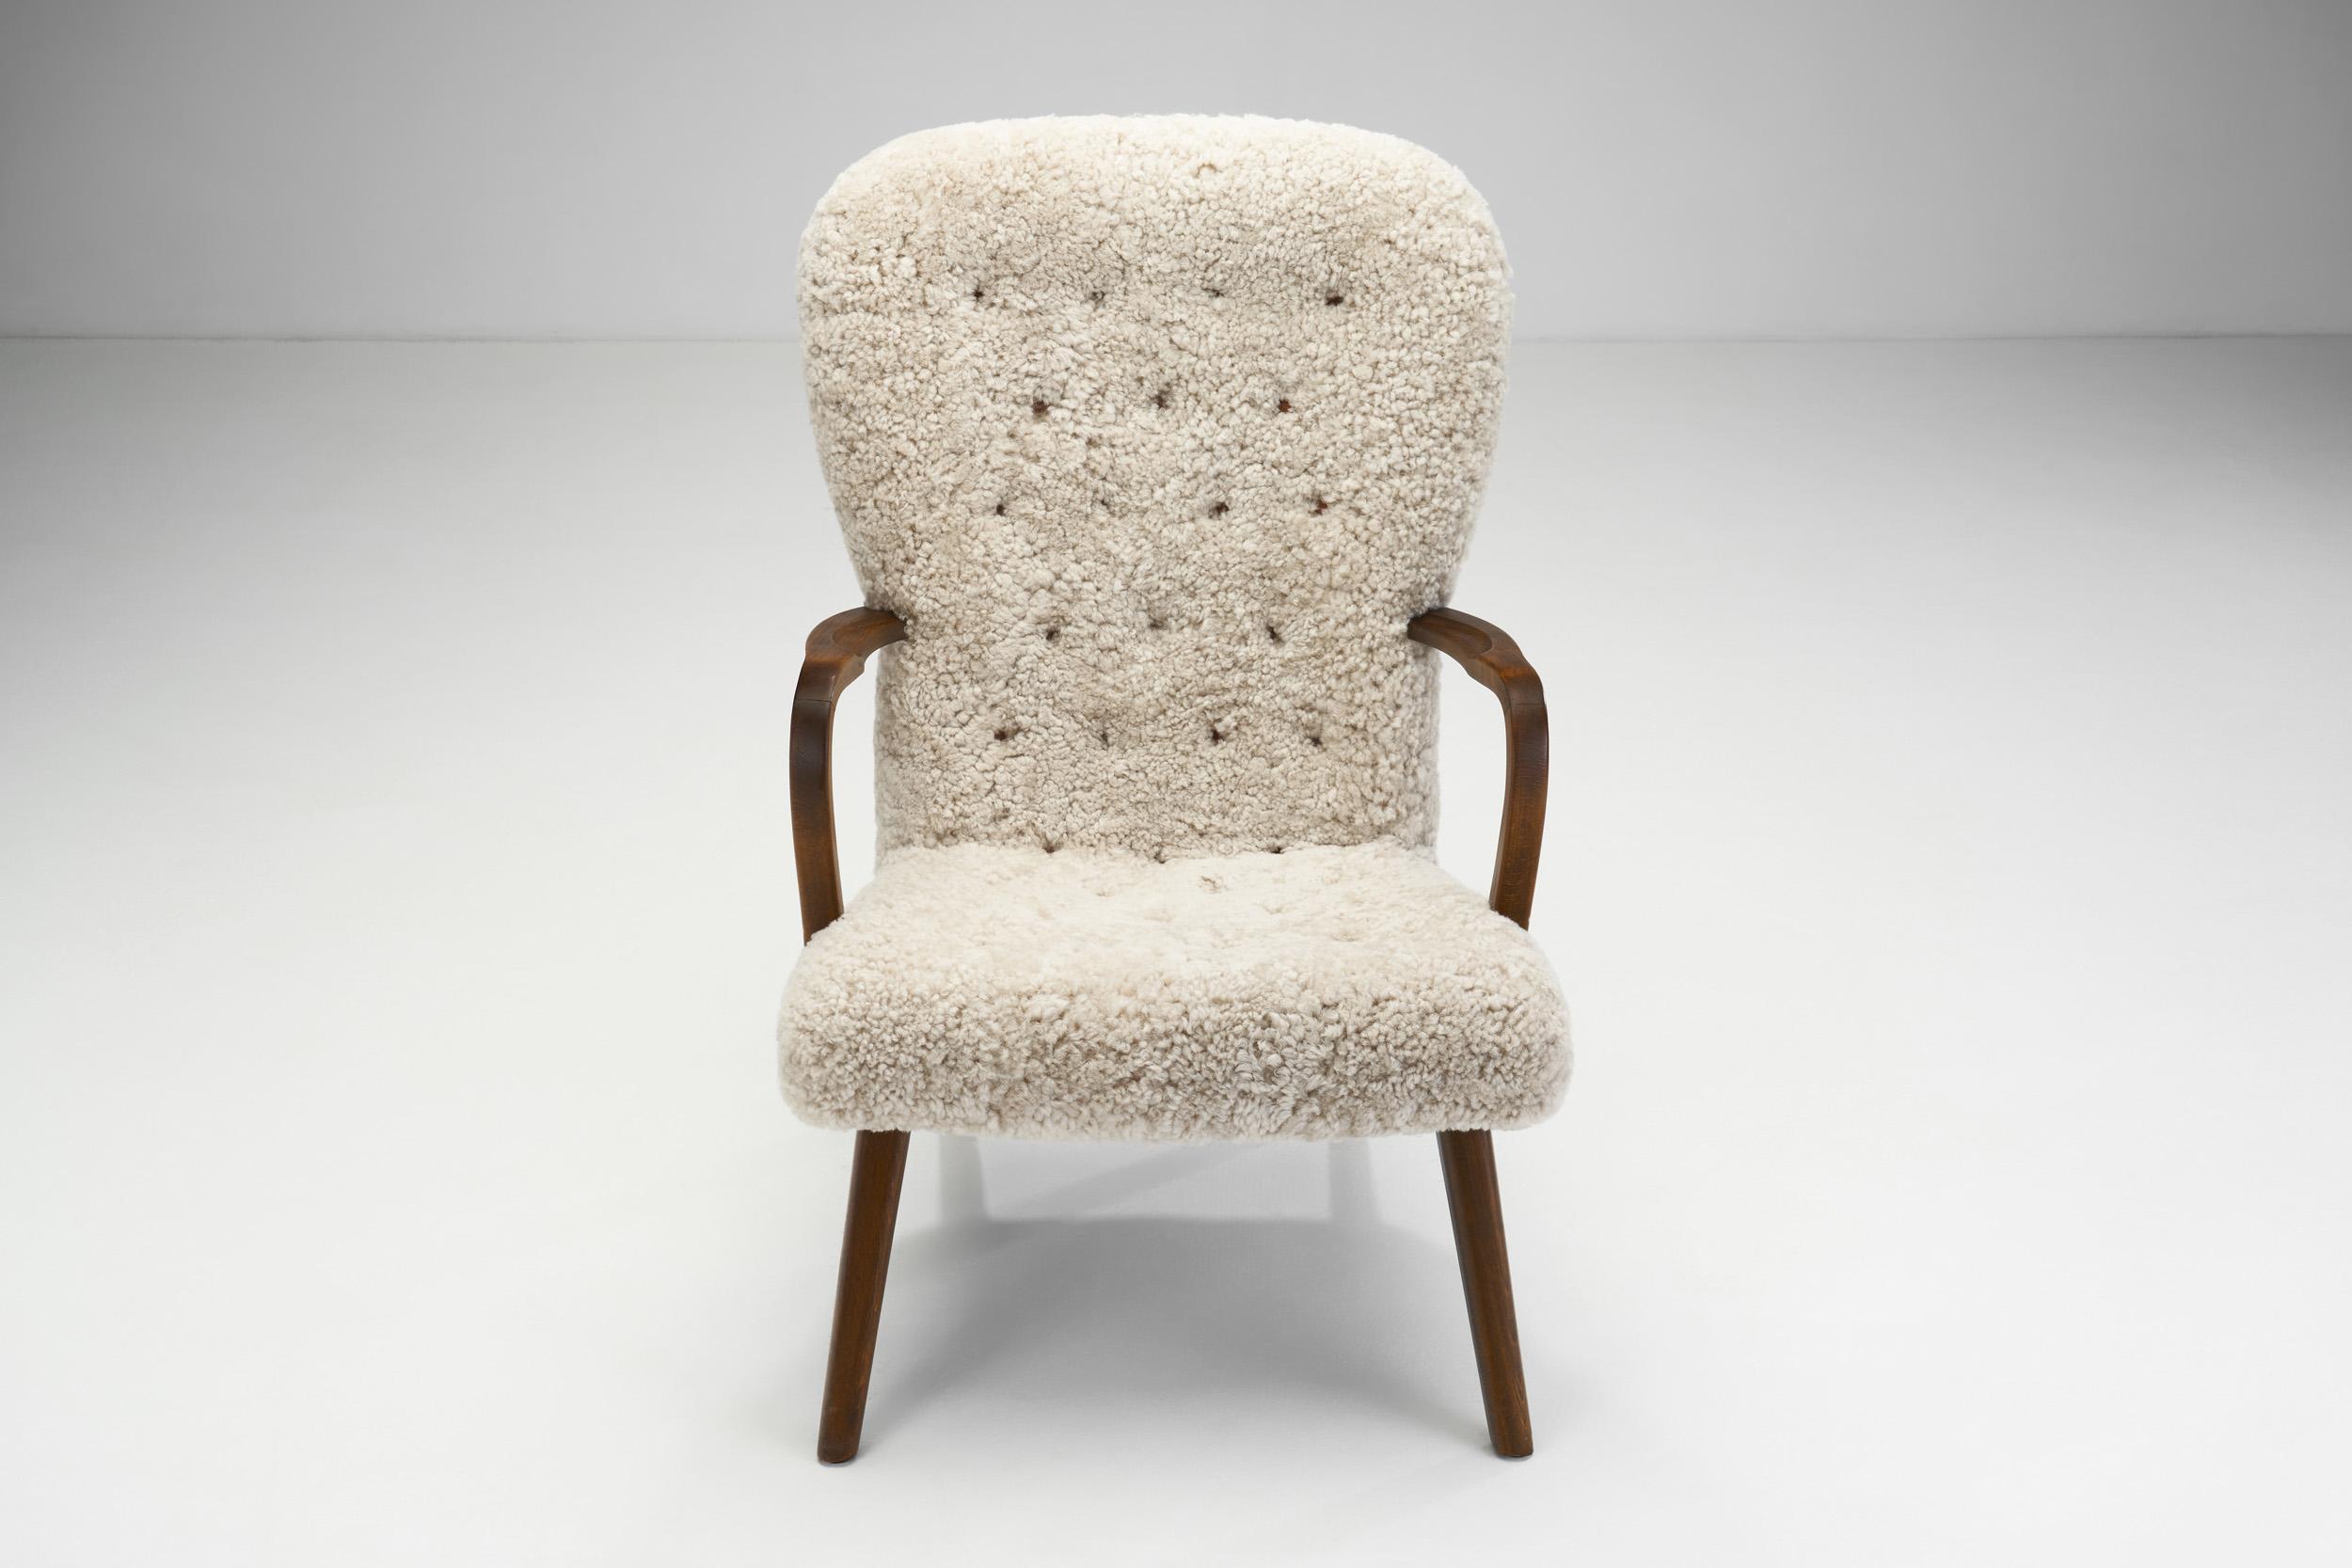 Stained Beech Easy Chair in Sheepskin by Danish Cabinetmaker, Denmark 1940s For Sale 2